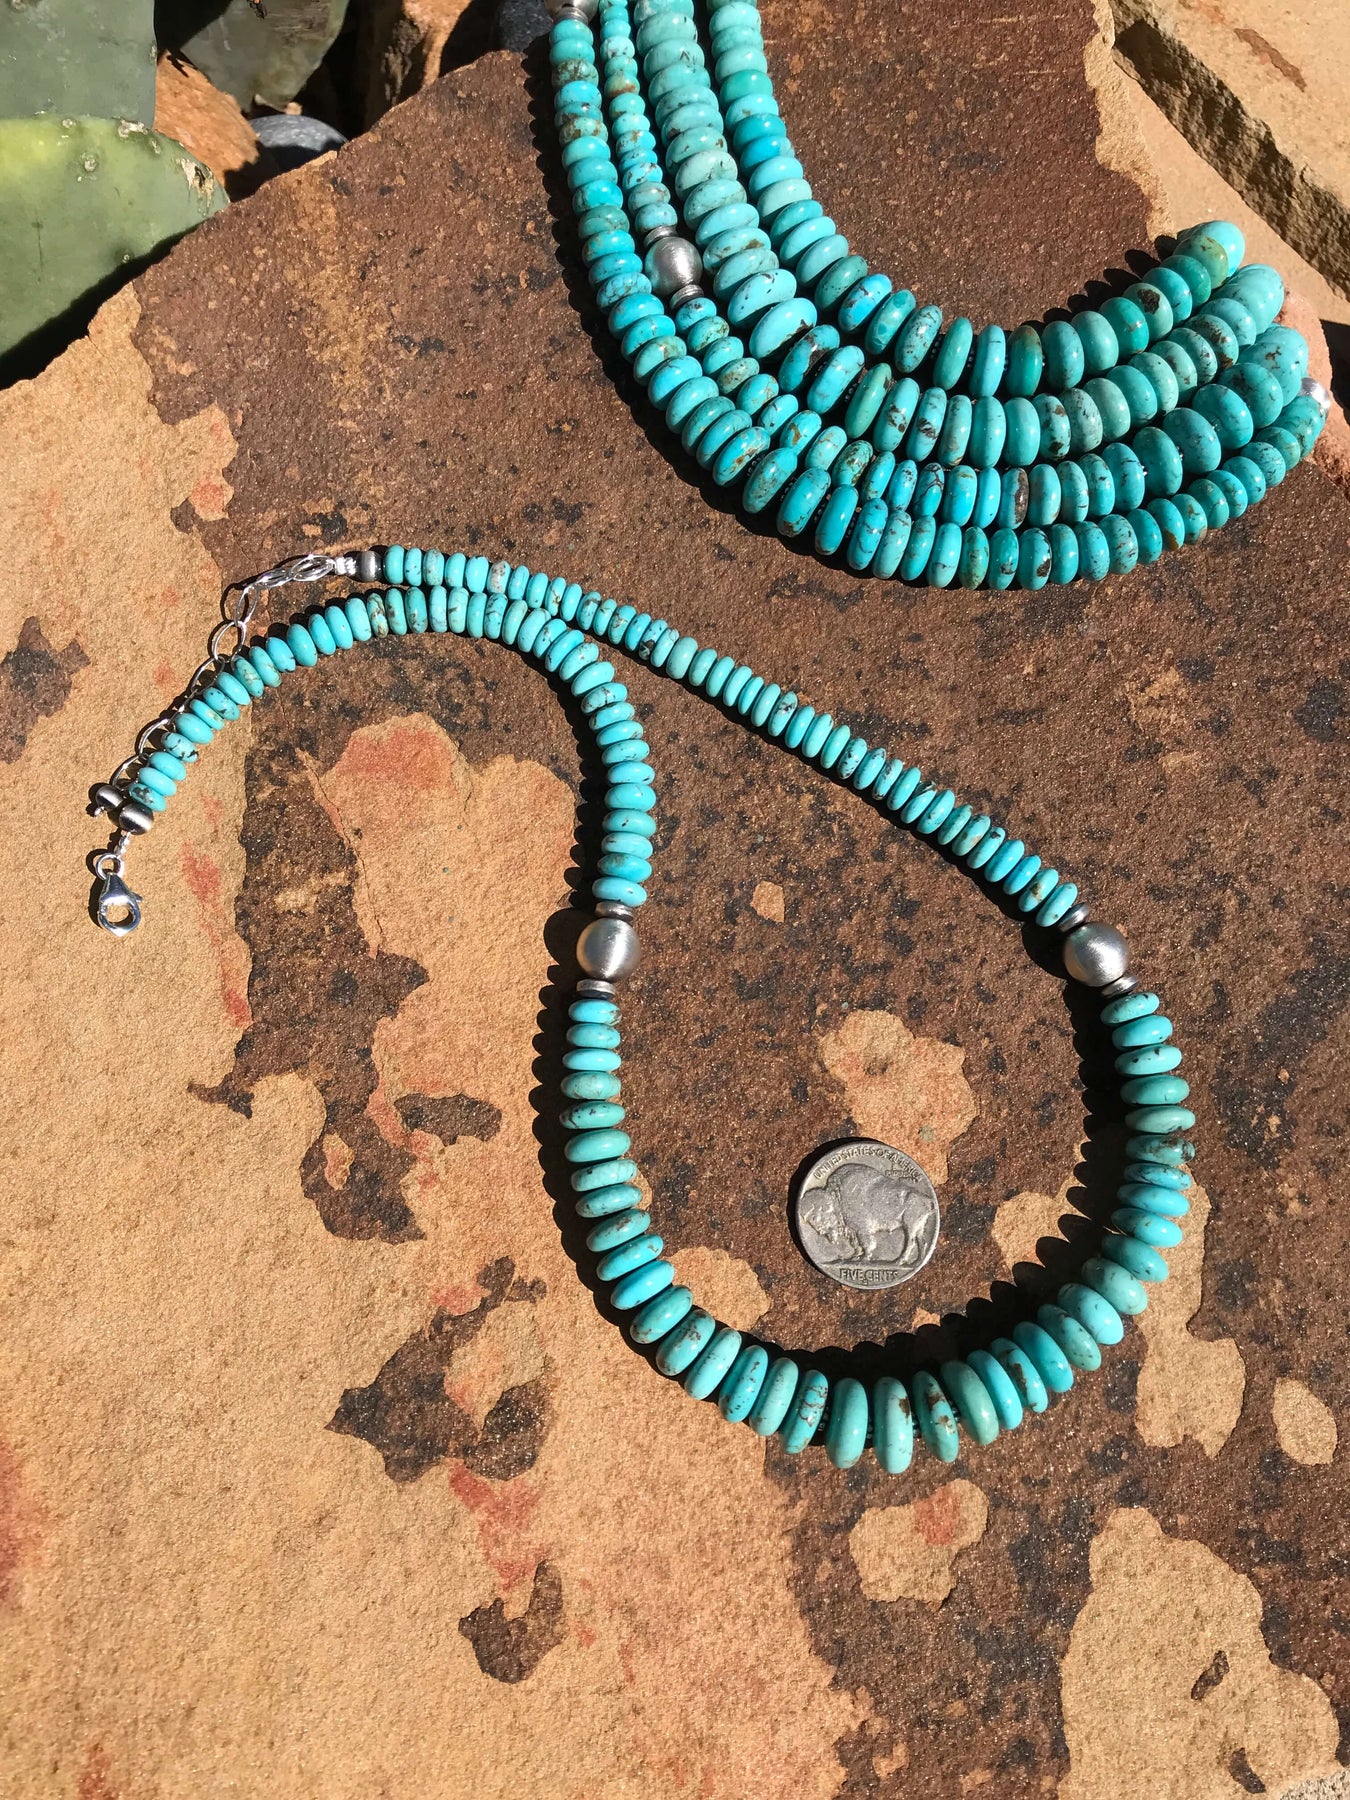 The Tullo Turquoise Ribbon Necklace, 3 – Calli Co. Silver